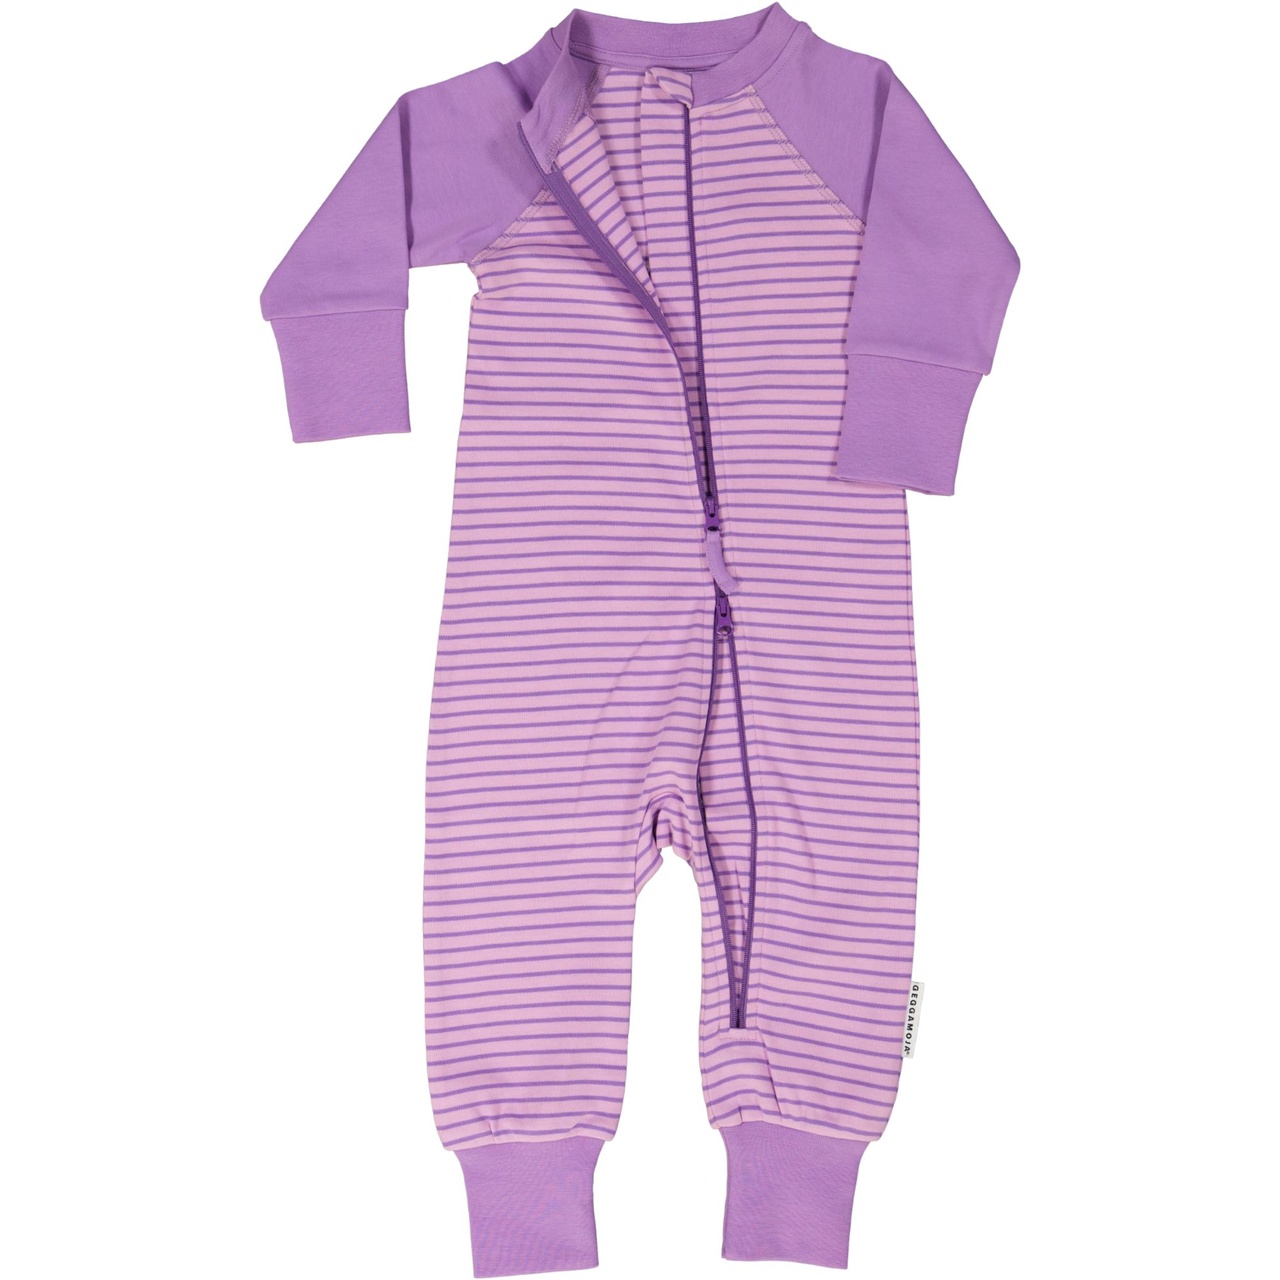 Pyjamas L.purple/purple  74/80